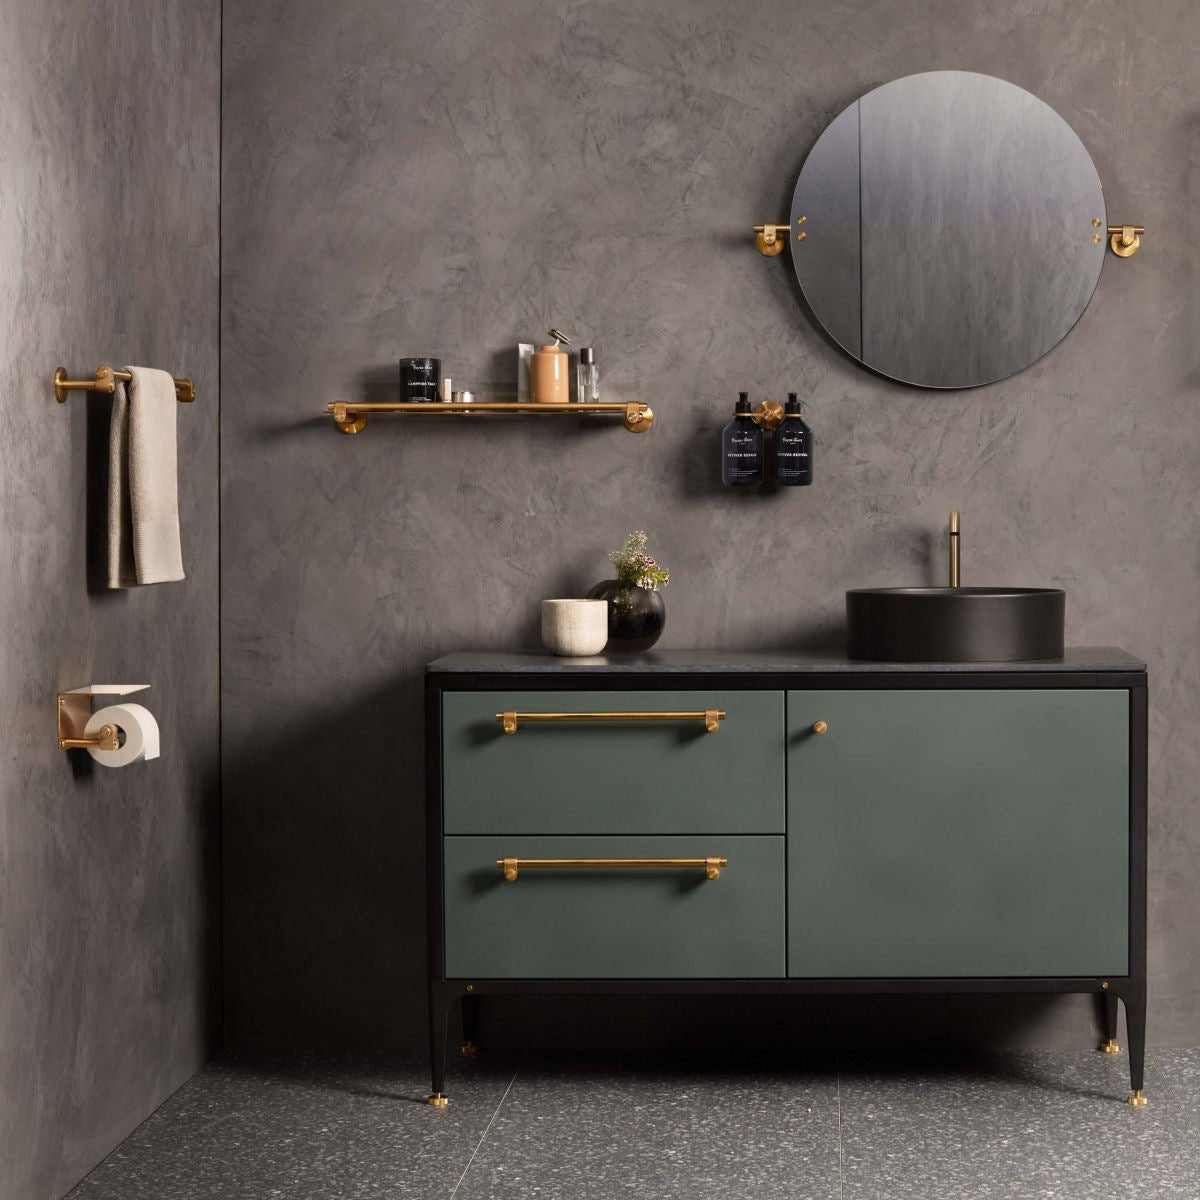 Massive Bathroom Cast Shelf Medium / Steel - |VESIMI Design| Luxury and Rustic bathrooms online